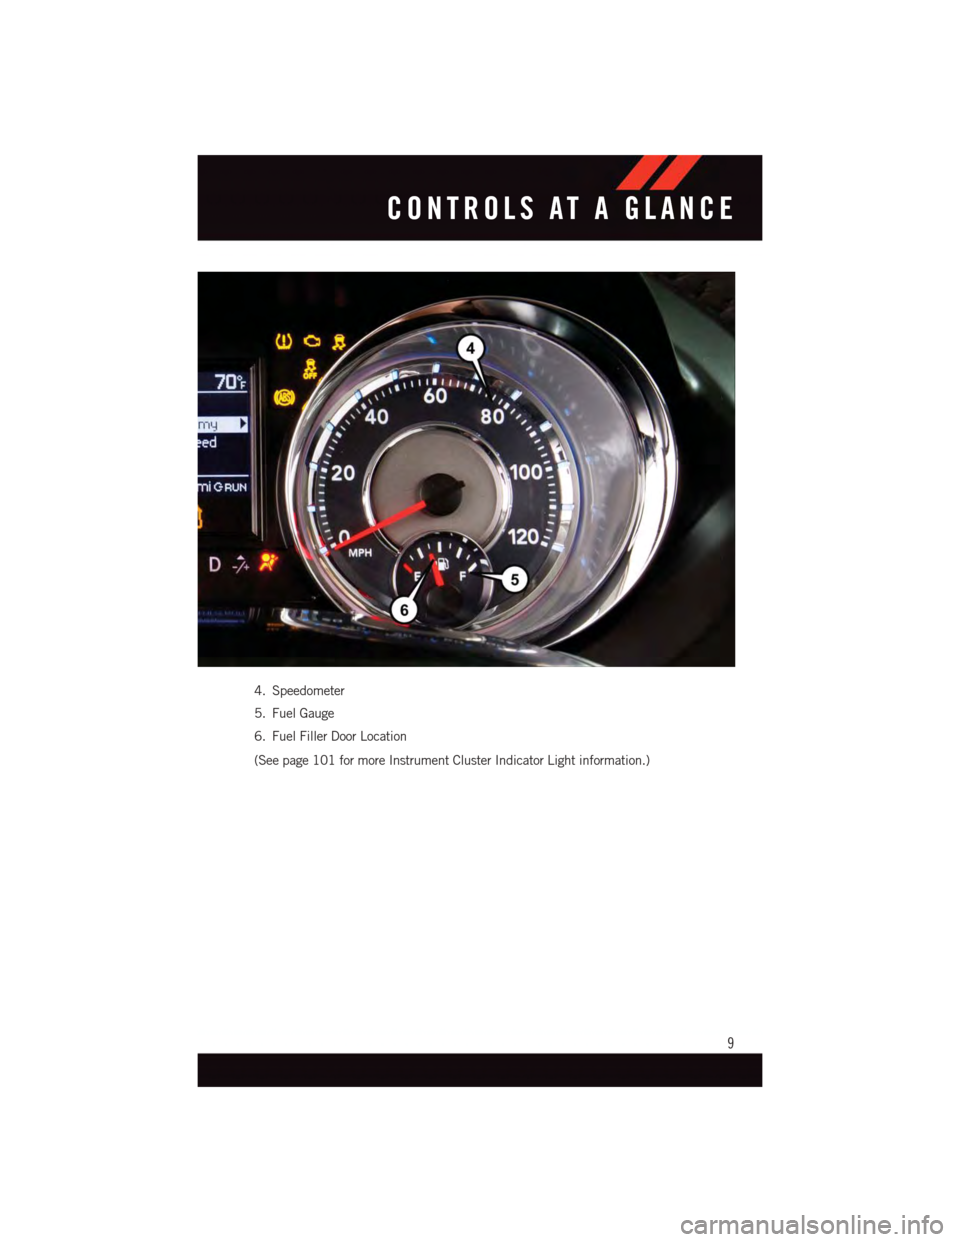 DODGE GRAND CARAVAN 2015 5.G User Guide 4. Speedometer
5. Fuel Gauge
6. Fuel Filler Door Location
(See page 101 for more Instrument Cluster Indicator Light information.)
CONTROLS AT A GLANCE
9 